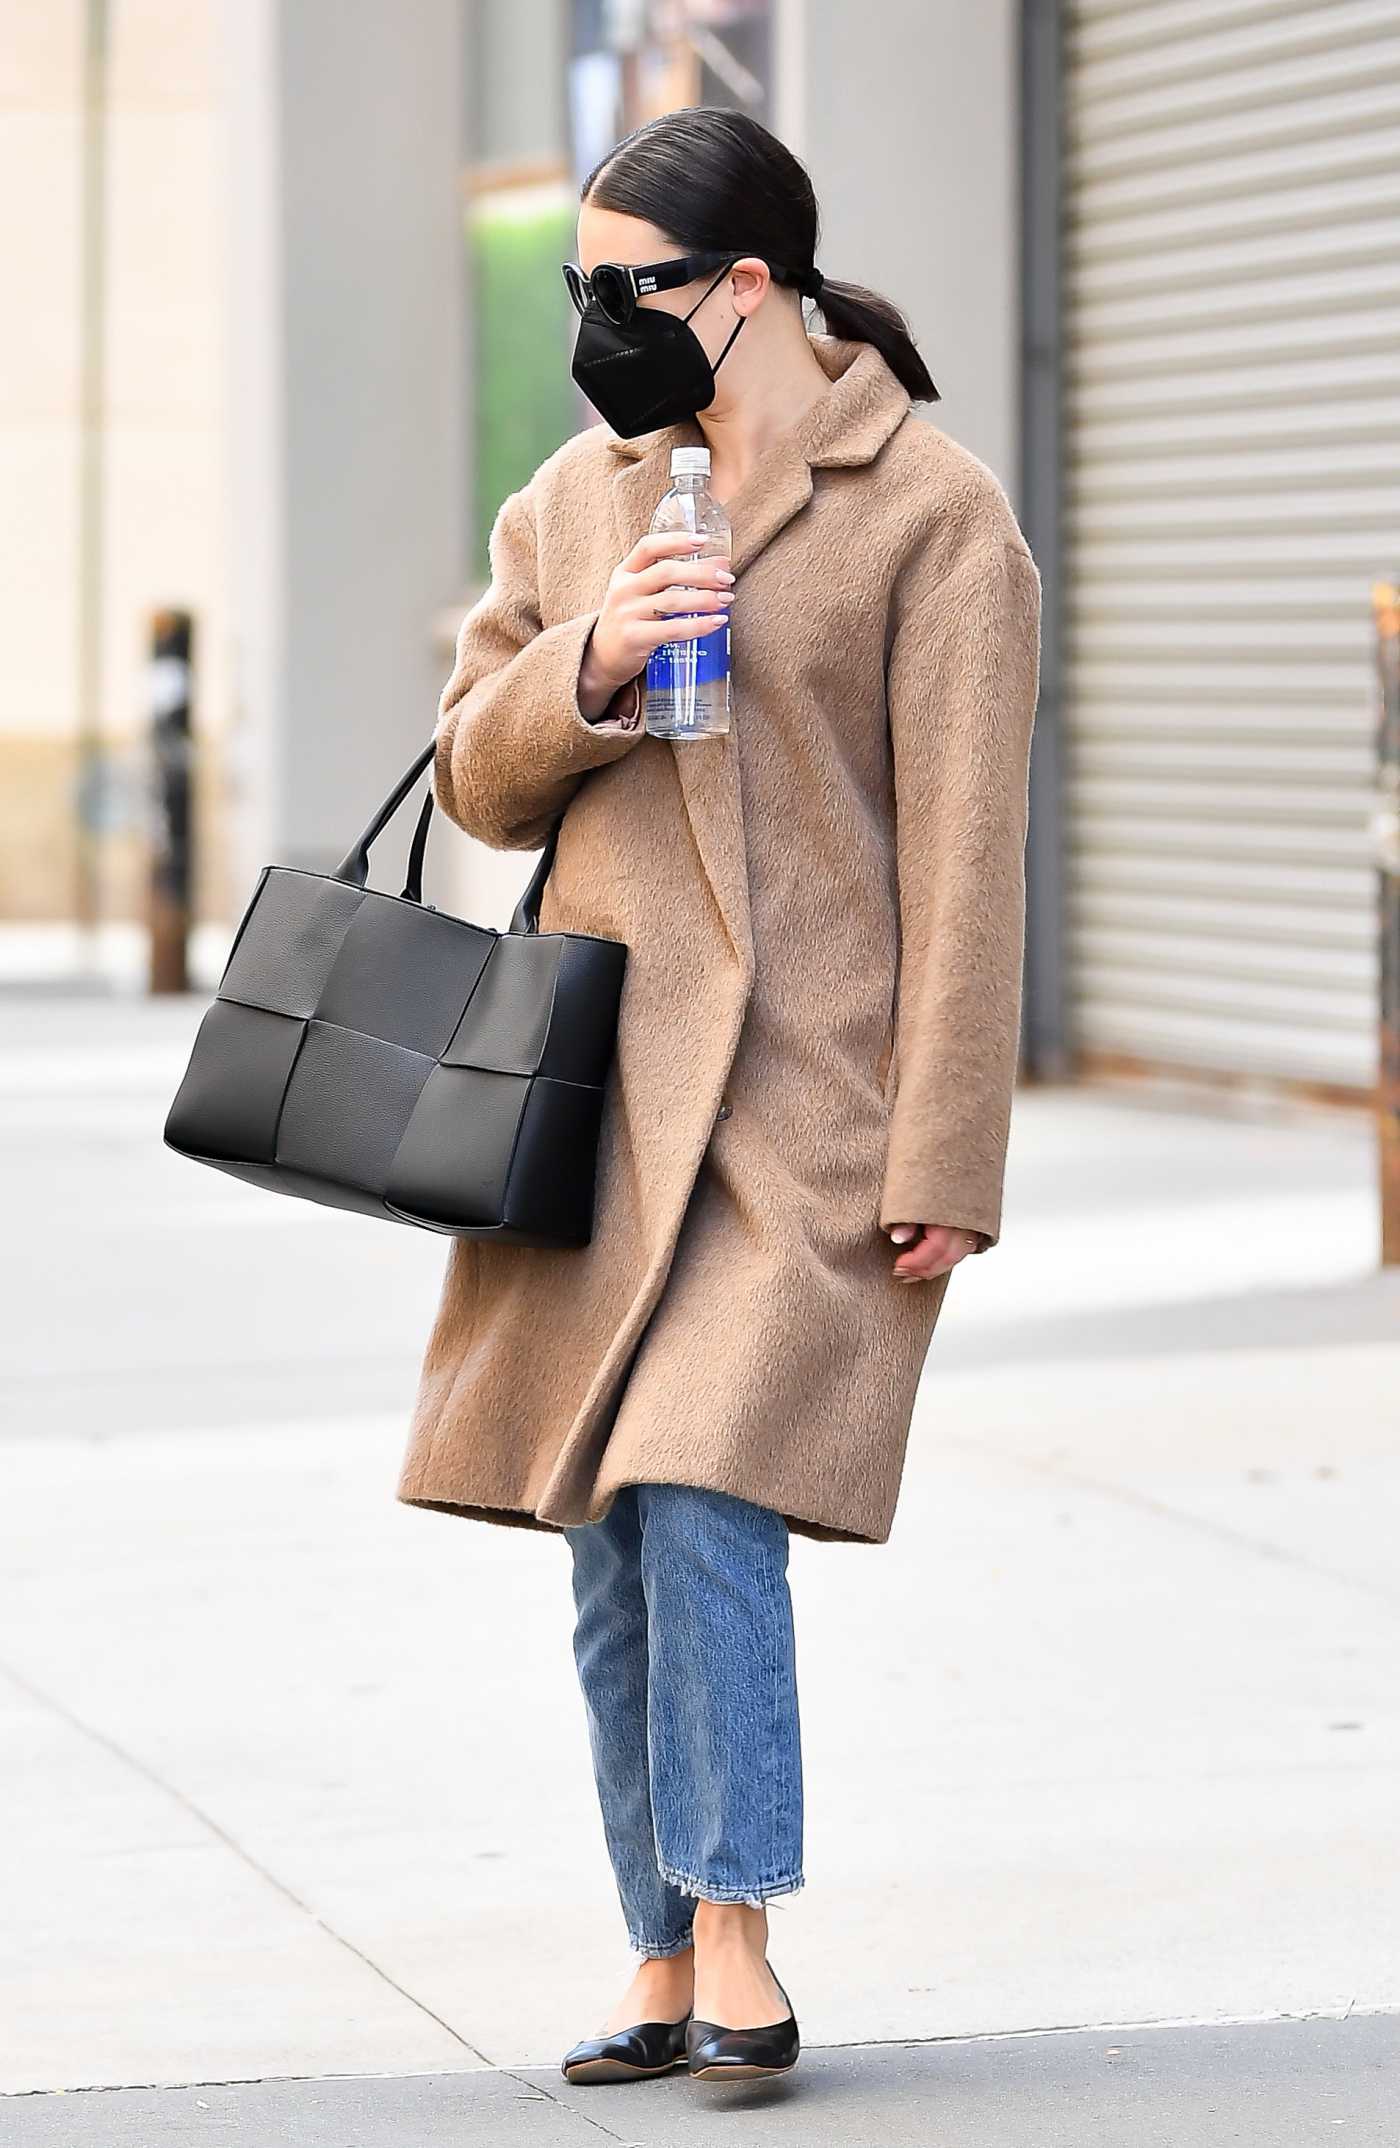 Lea Michele in a Beige Coat Was Seen Out in New York 10/15/2022